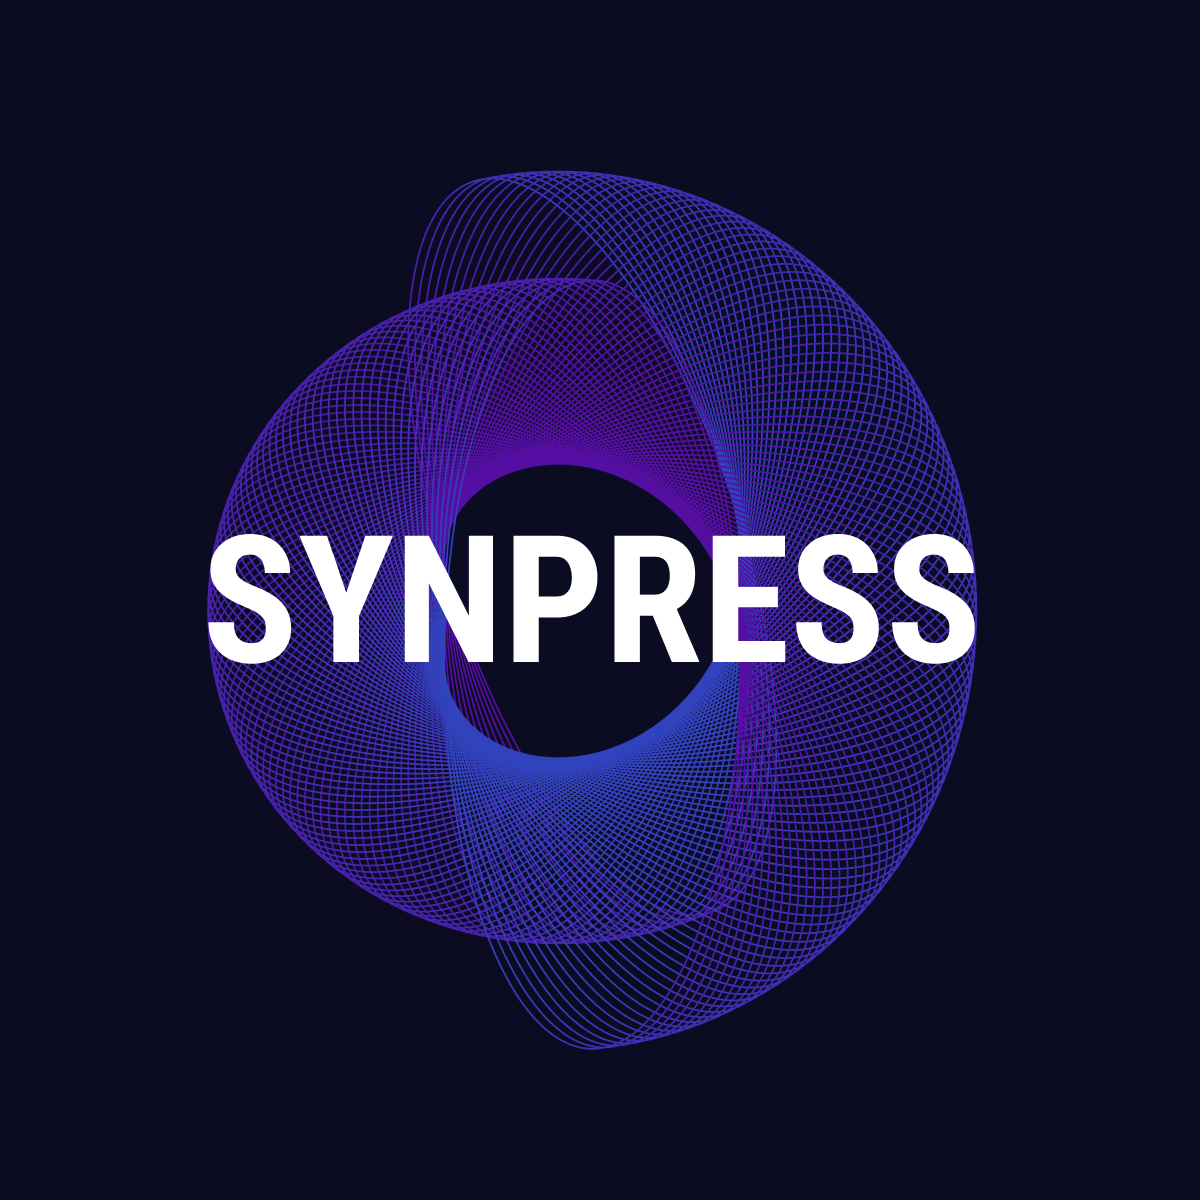 Synpress